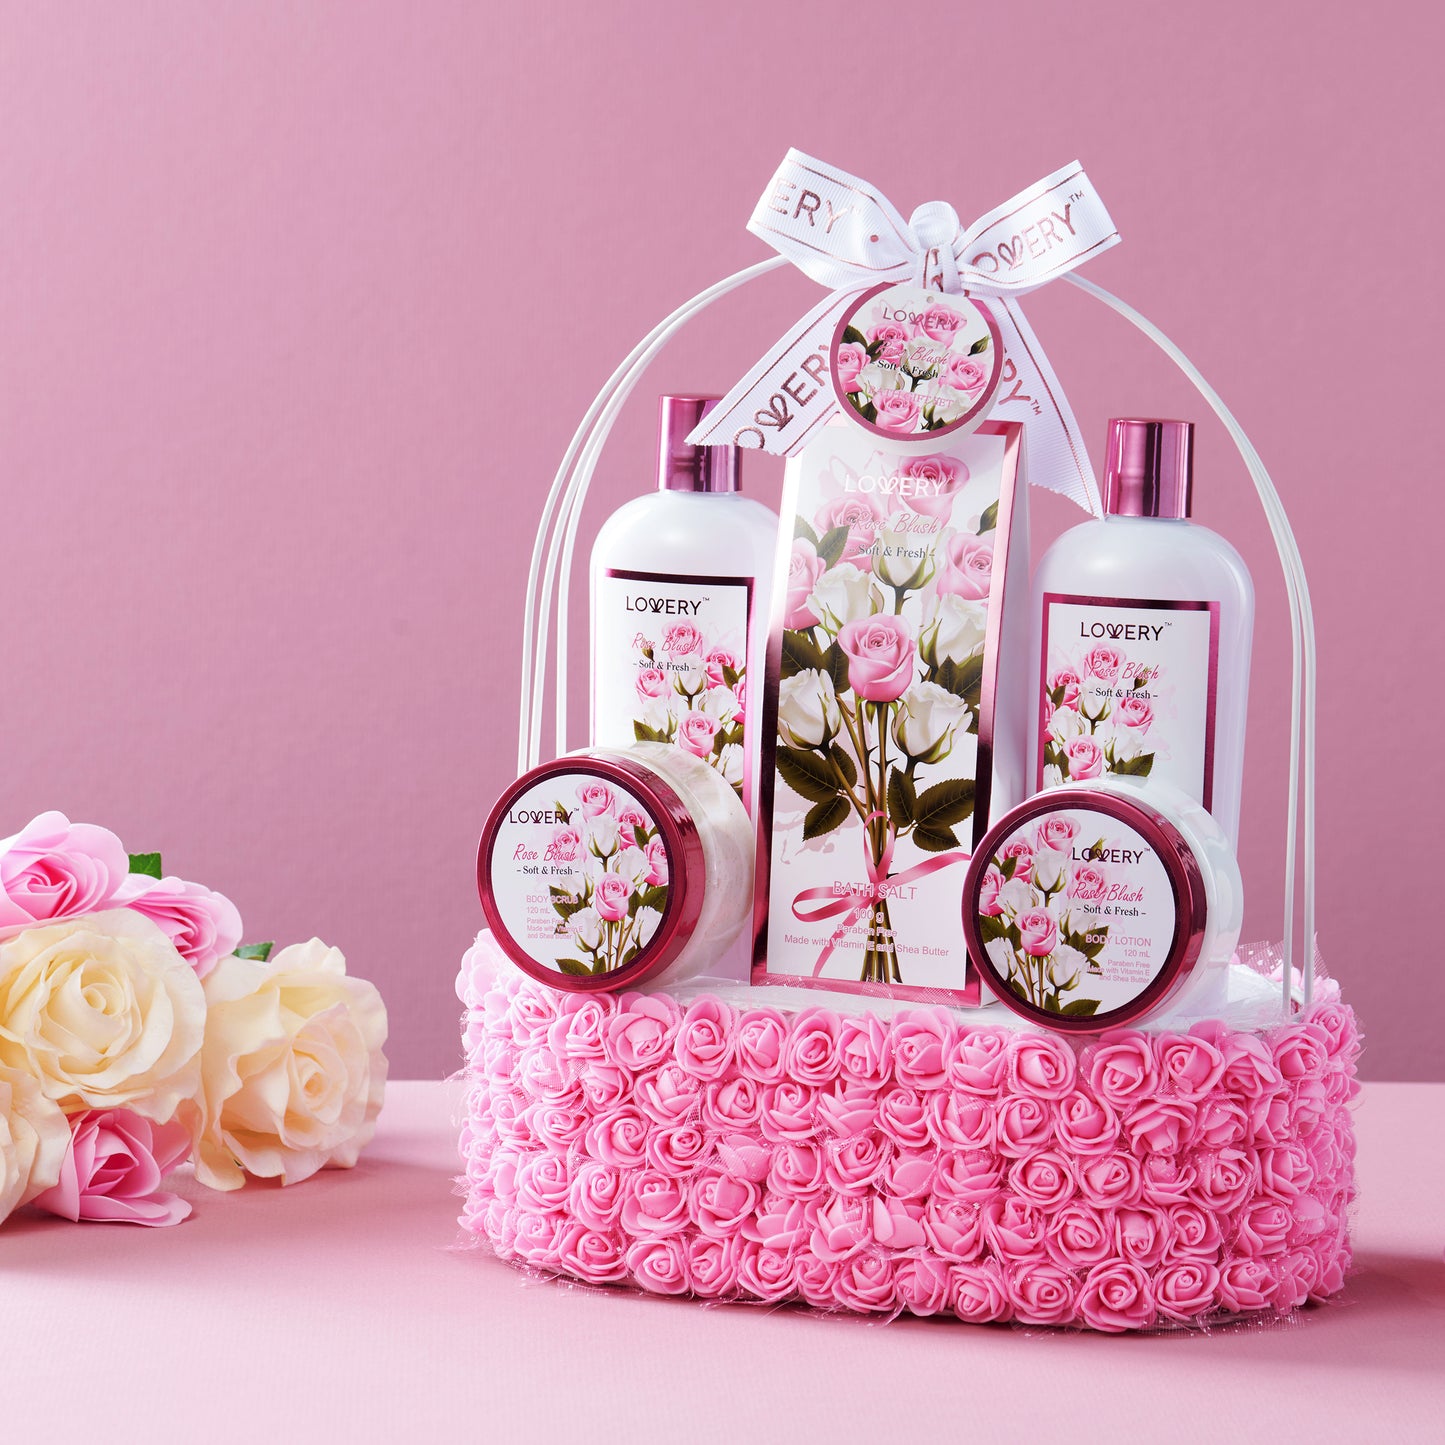 Posh Pink Citron Spa Basket - Spa Gift Baskets Delivered | by Olive & Cocoa